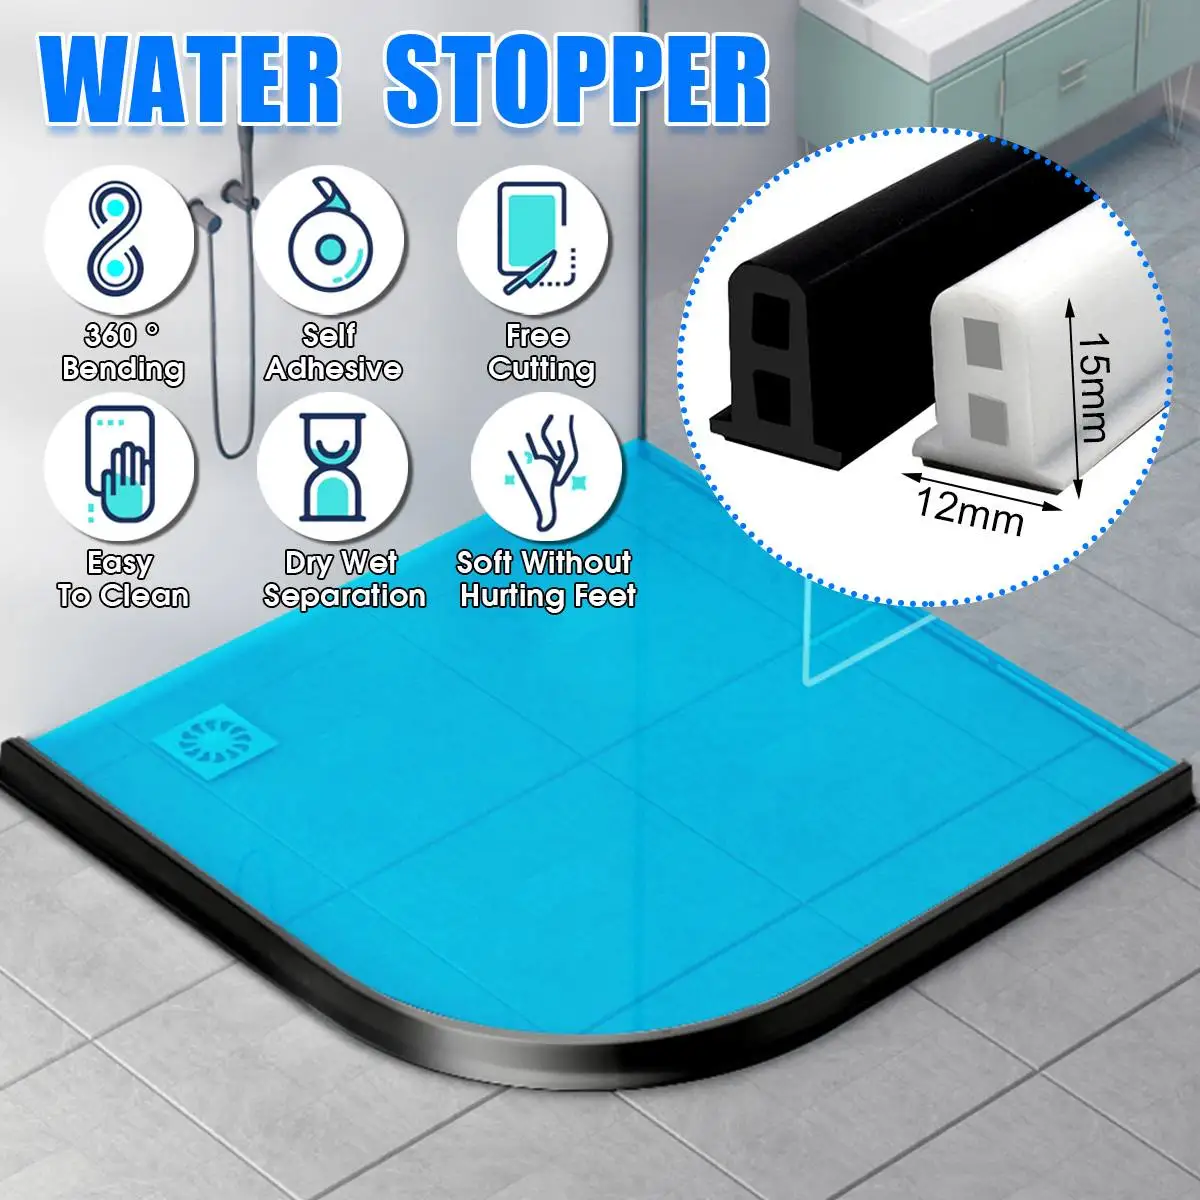 Details about   Bathroom Water Stopper Threshold Shower Retaining Dam Strip Washing Machine Seal